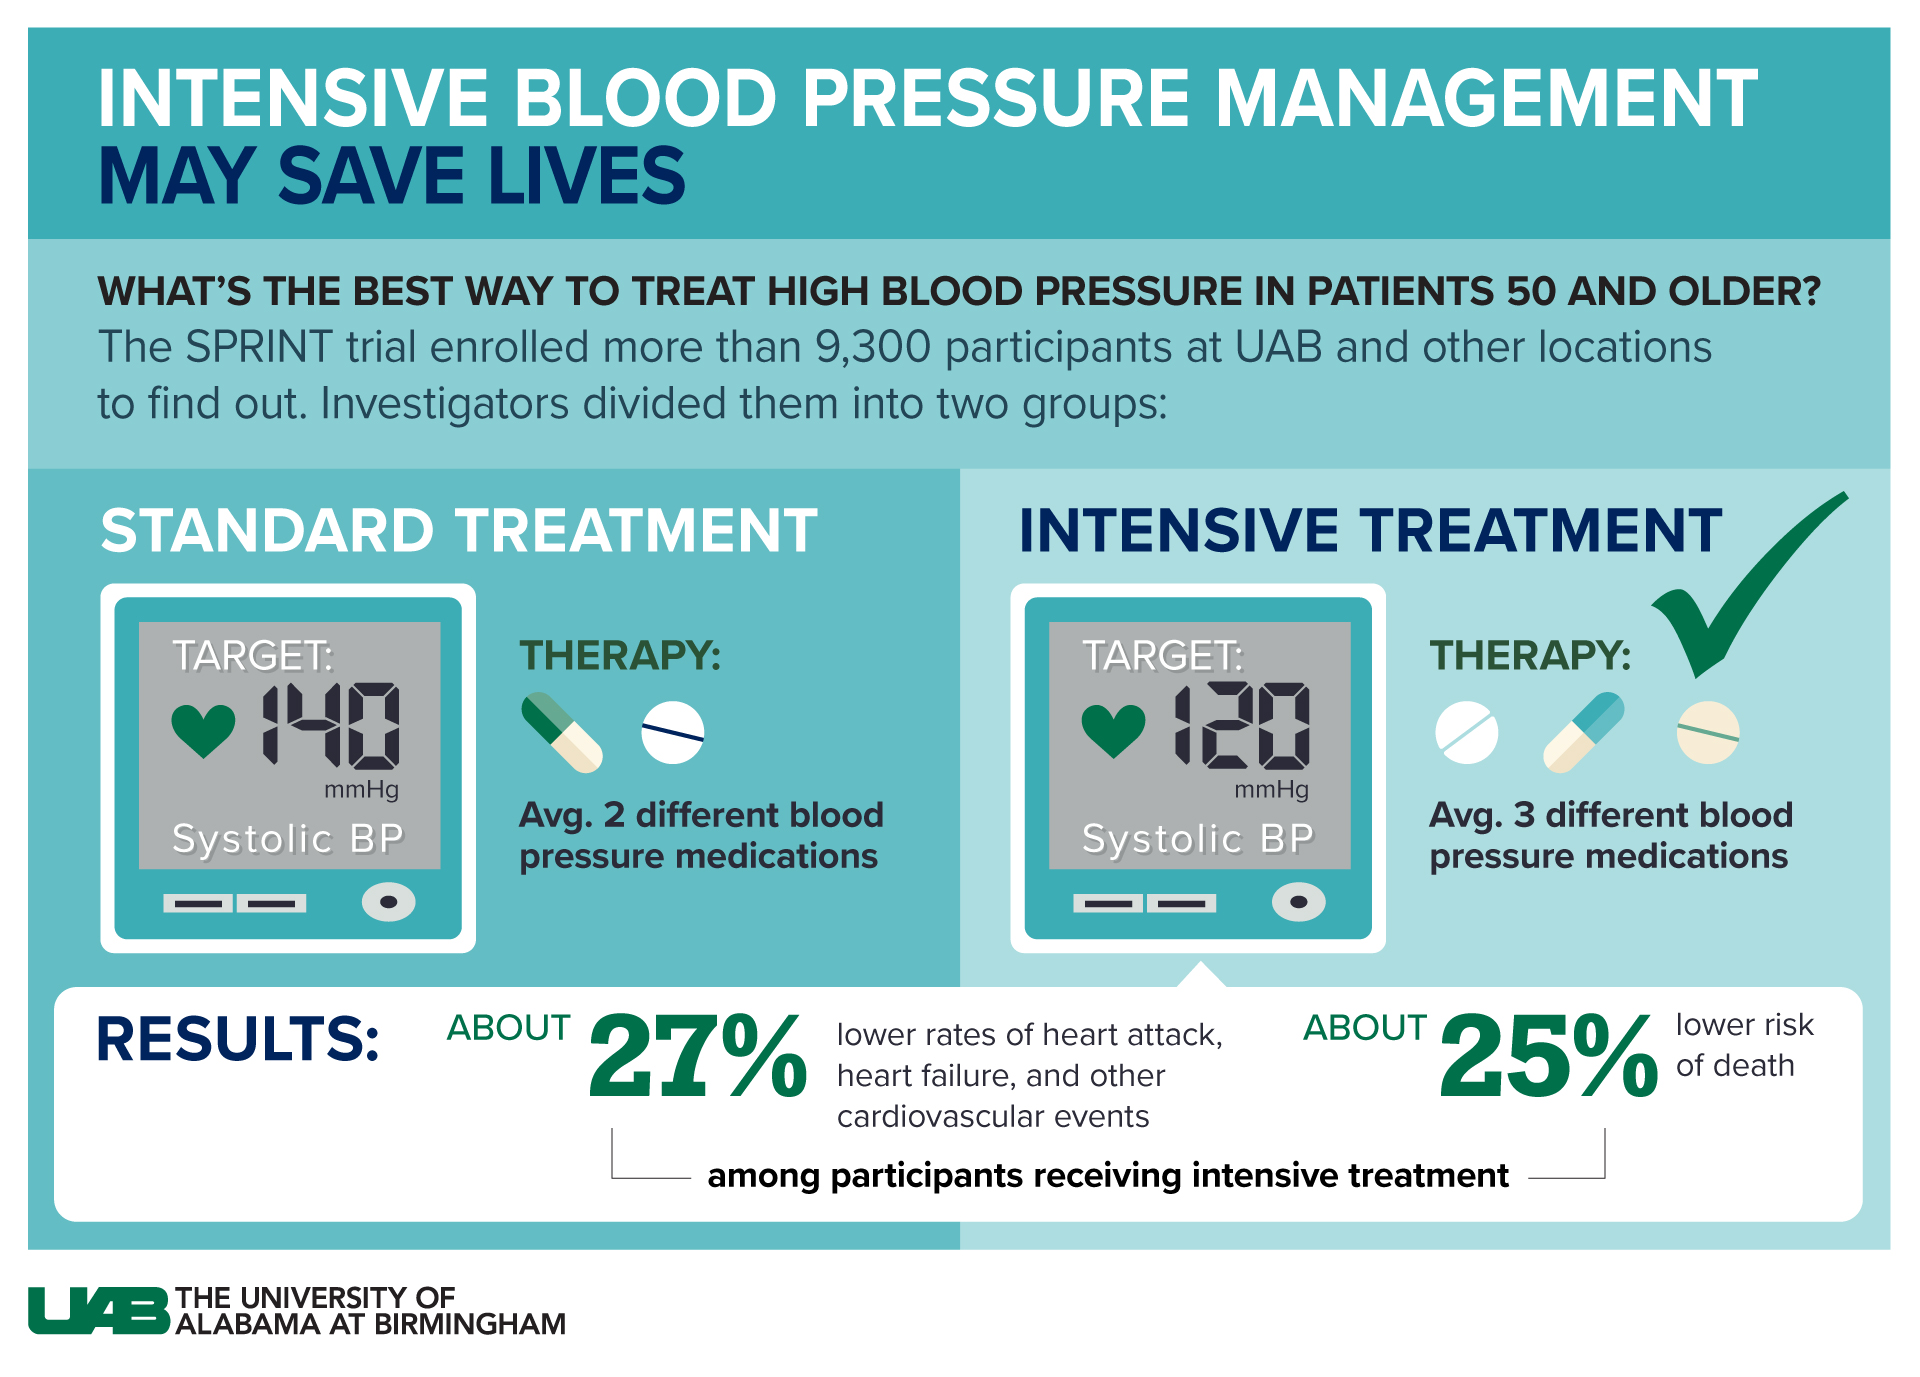 https://www.uab.edu/news/images/2018/2021-Intensive-Blood-Pressure-Treatment-graphic_copy.jpg